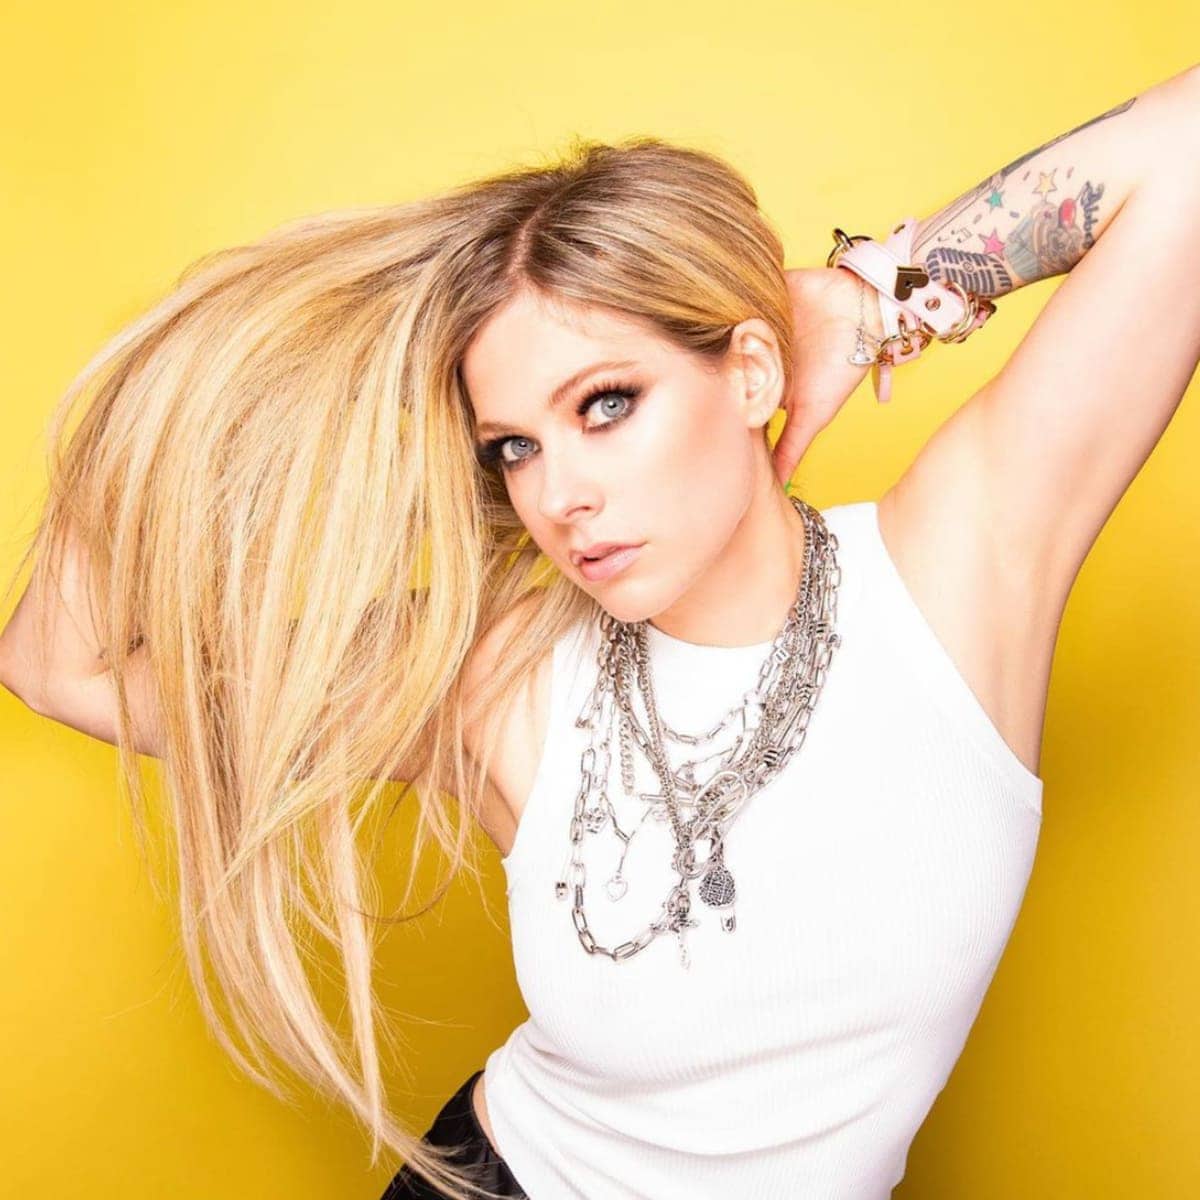 Avril Lavigne on Instagram